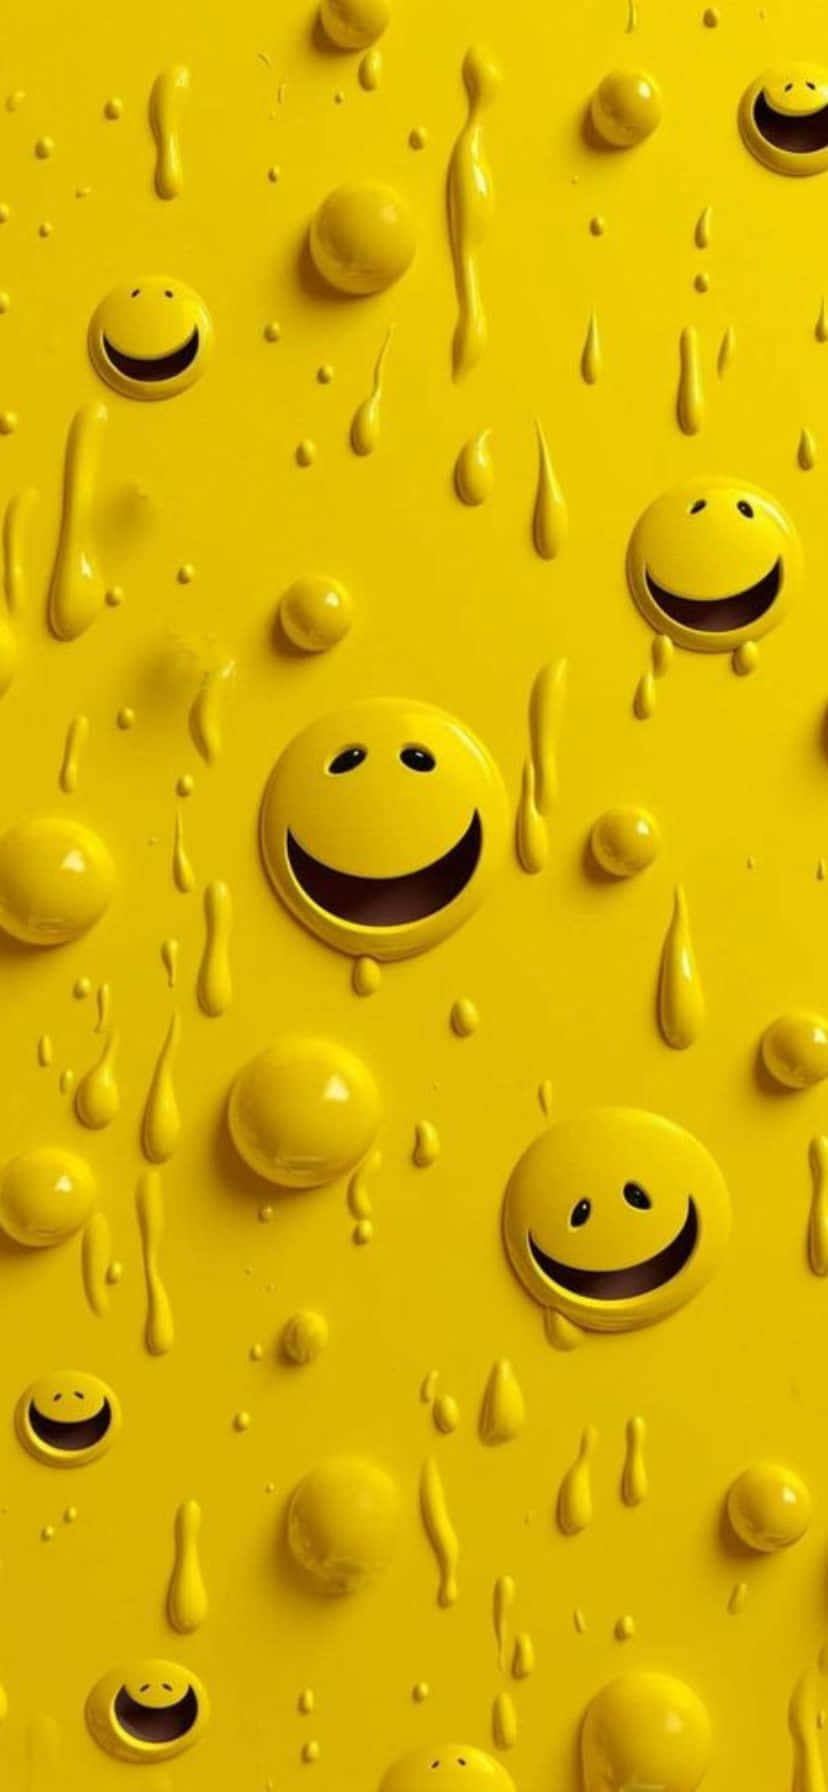 Yellow Smiley Faces Texture Wallpaper